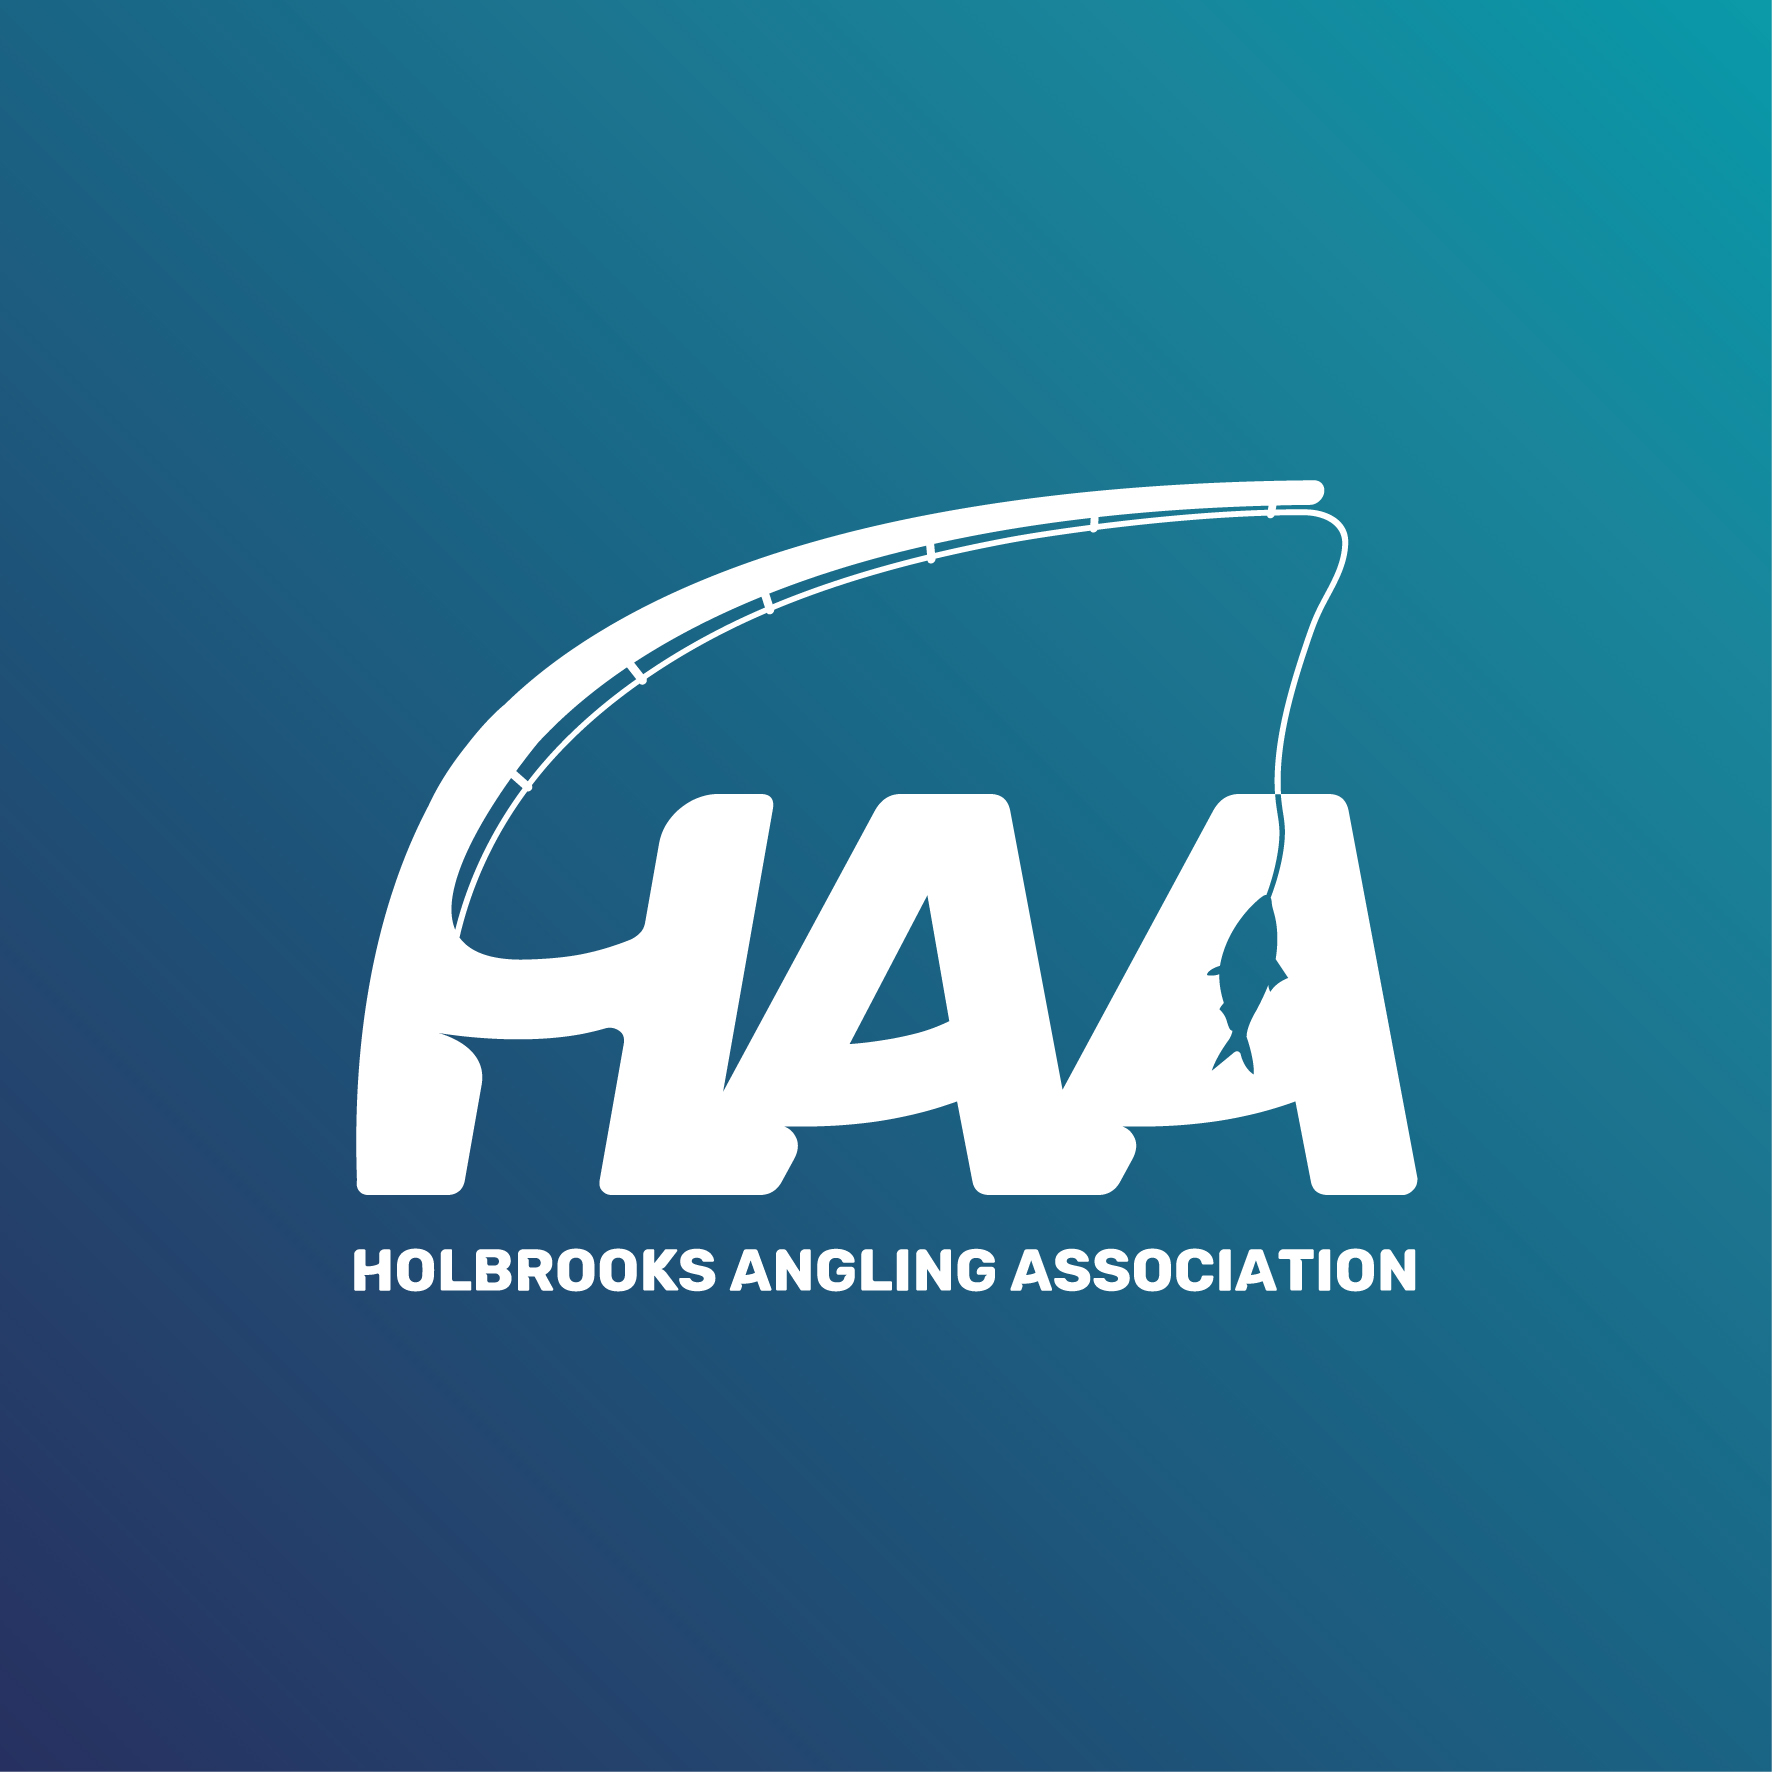 Holbrooks Angling Association Logo Design